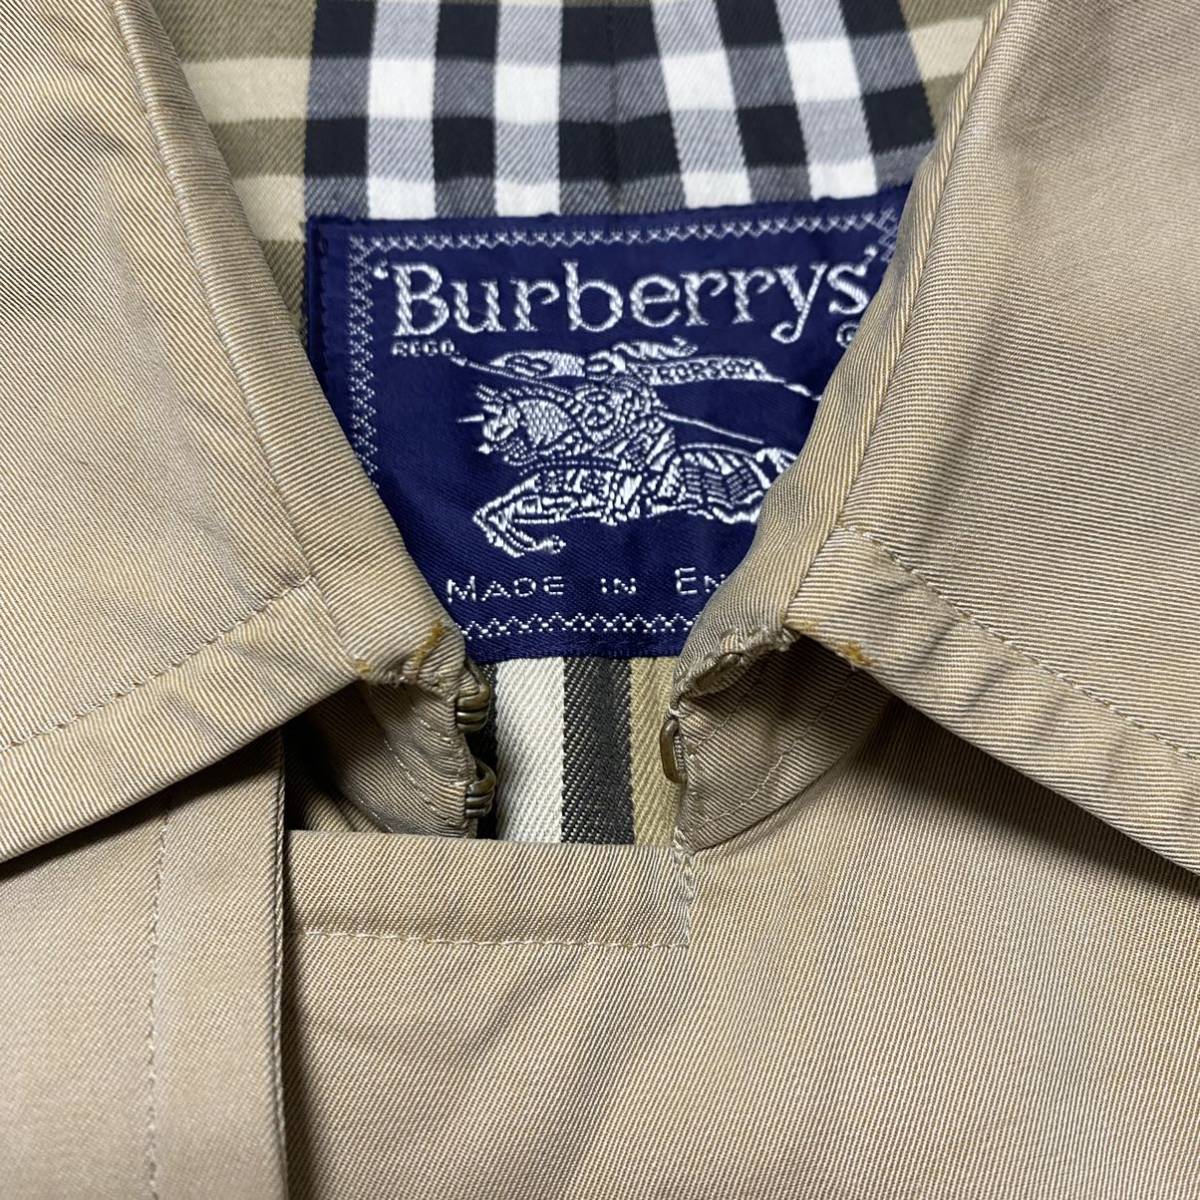 '87 Burberrys' トレンチ コート イングランド製 オールドバーバリー_画像6